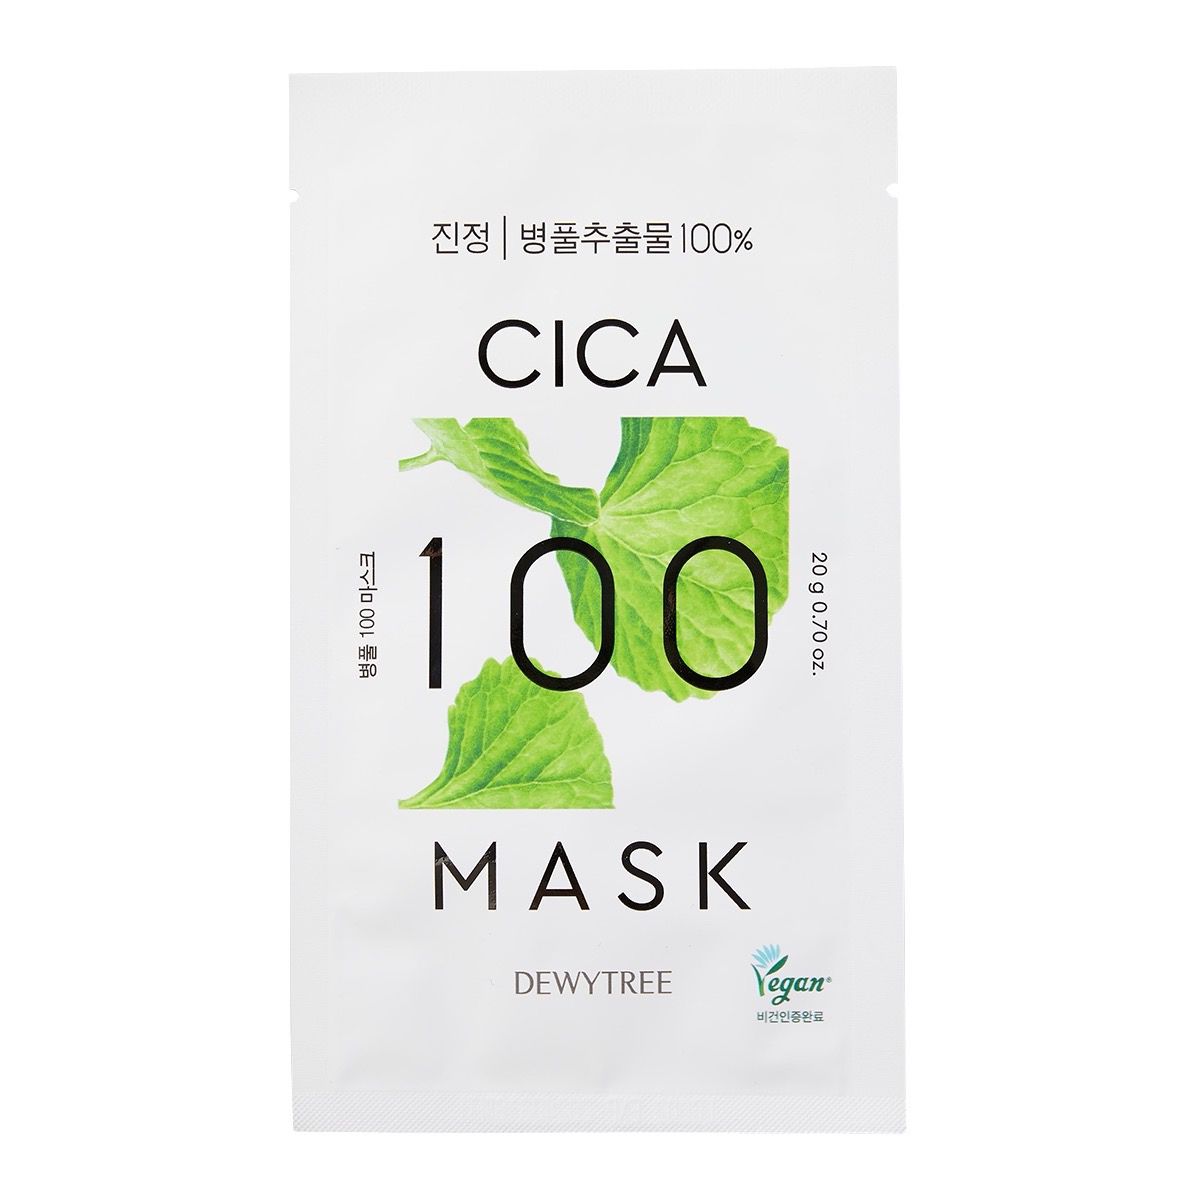 DEWYTREE】CICAフェイスマスクの通販【使用感・口コミ付】 | NOIN(ノイン)